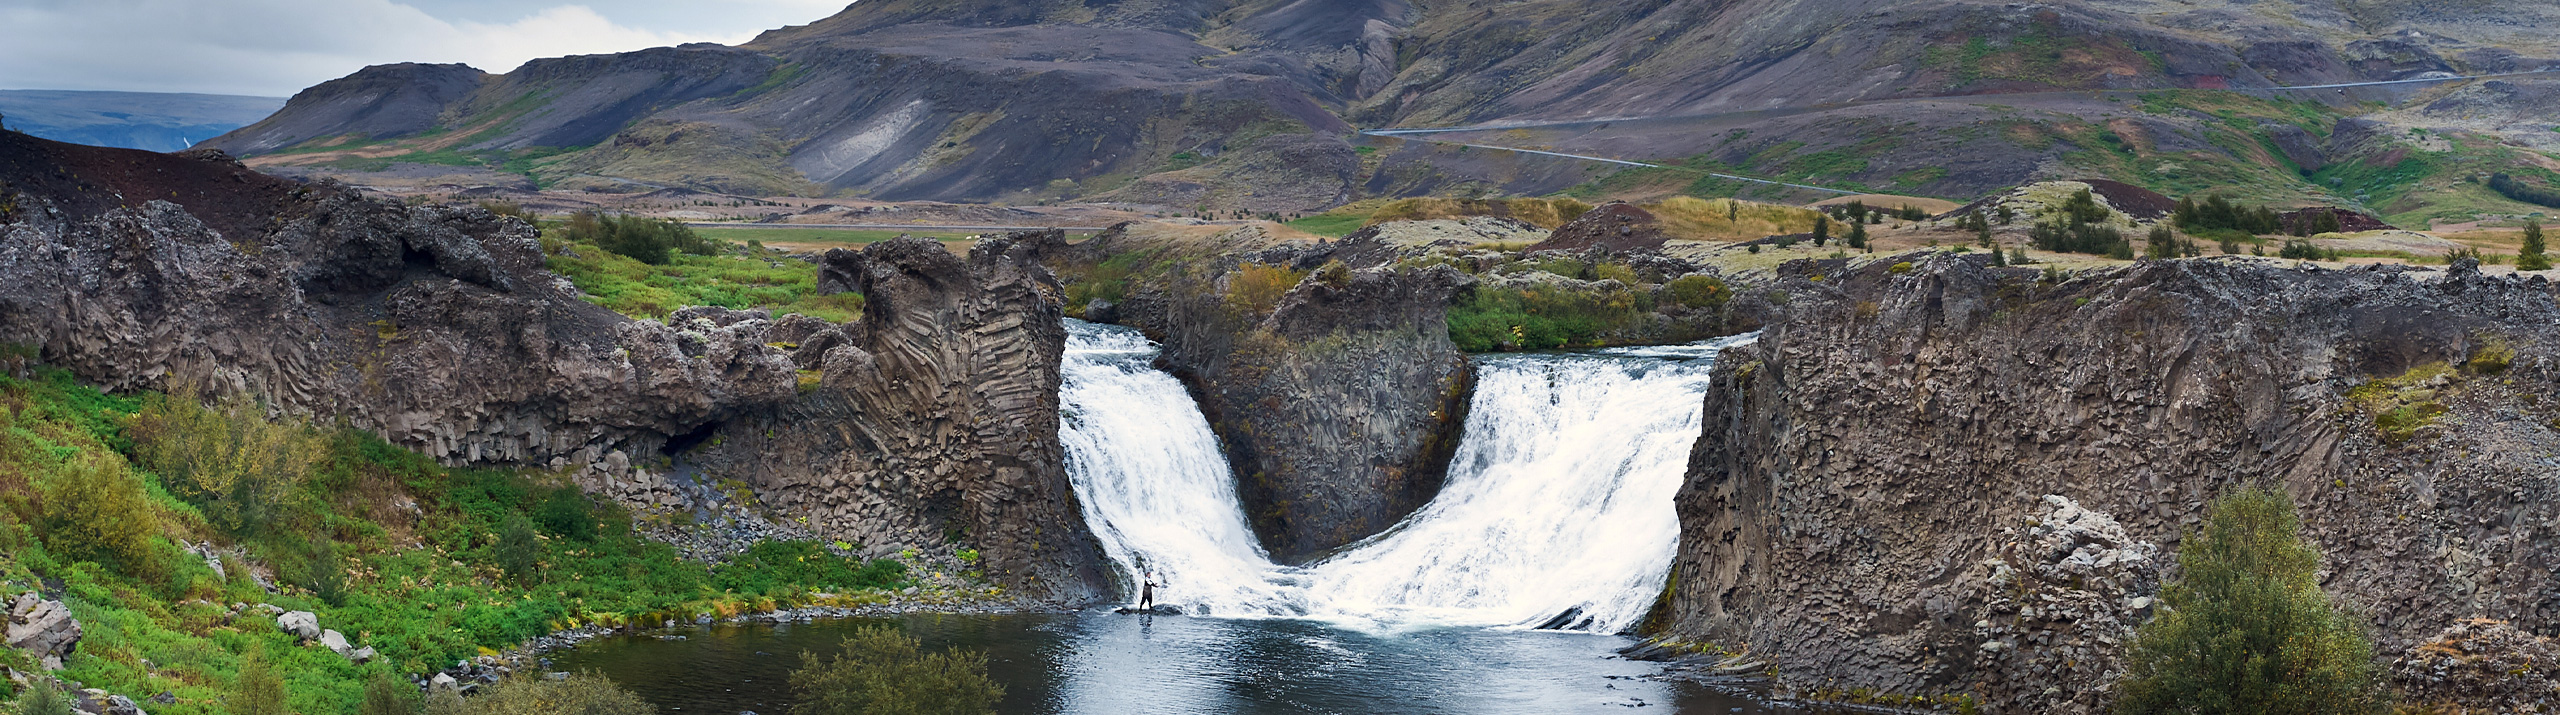 Hjalparfoss vandfaldet - vandfald i Island